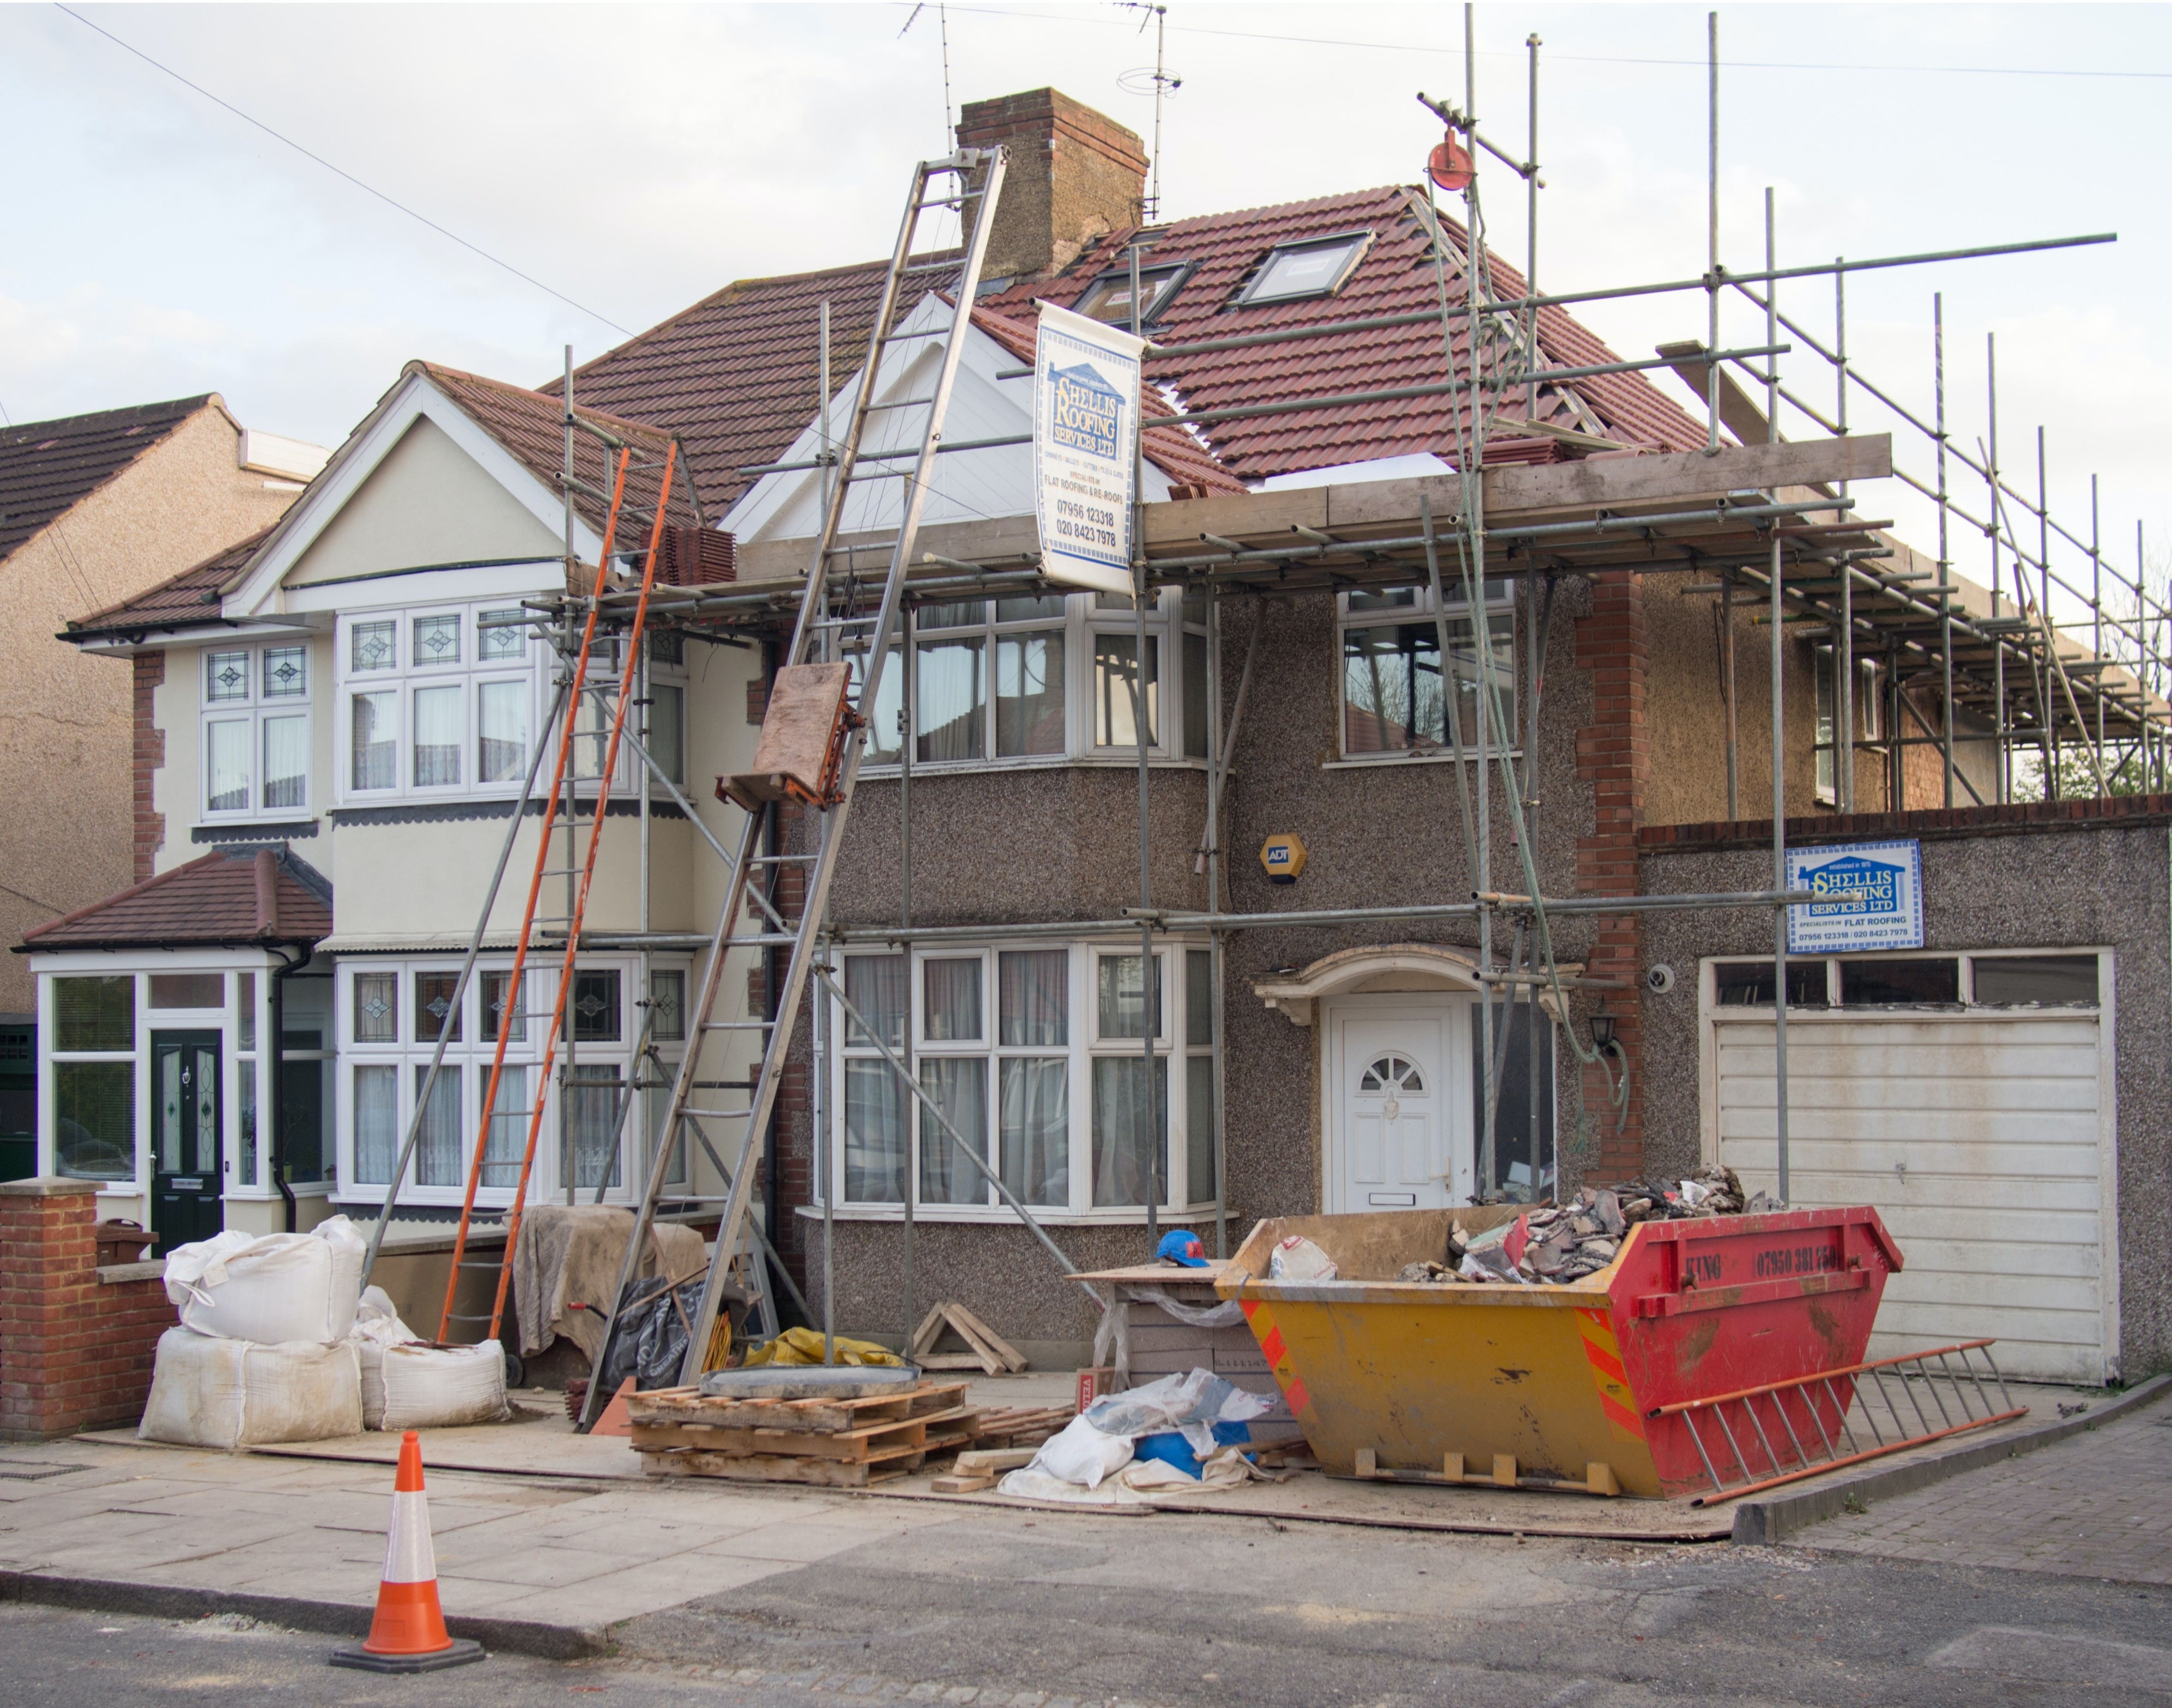 UK house scaffolded in home improvement effort